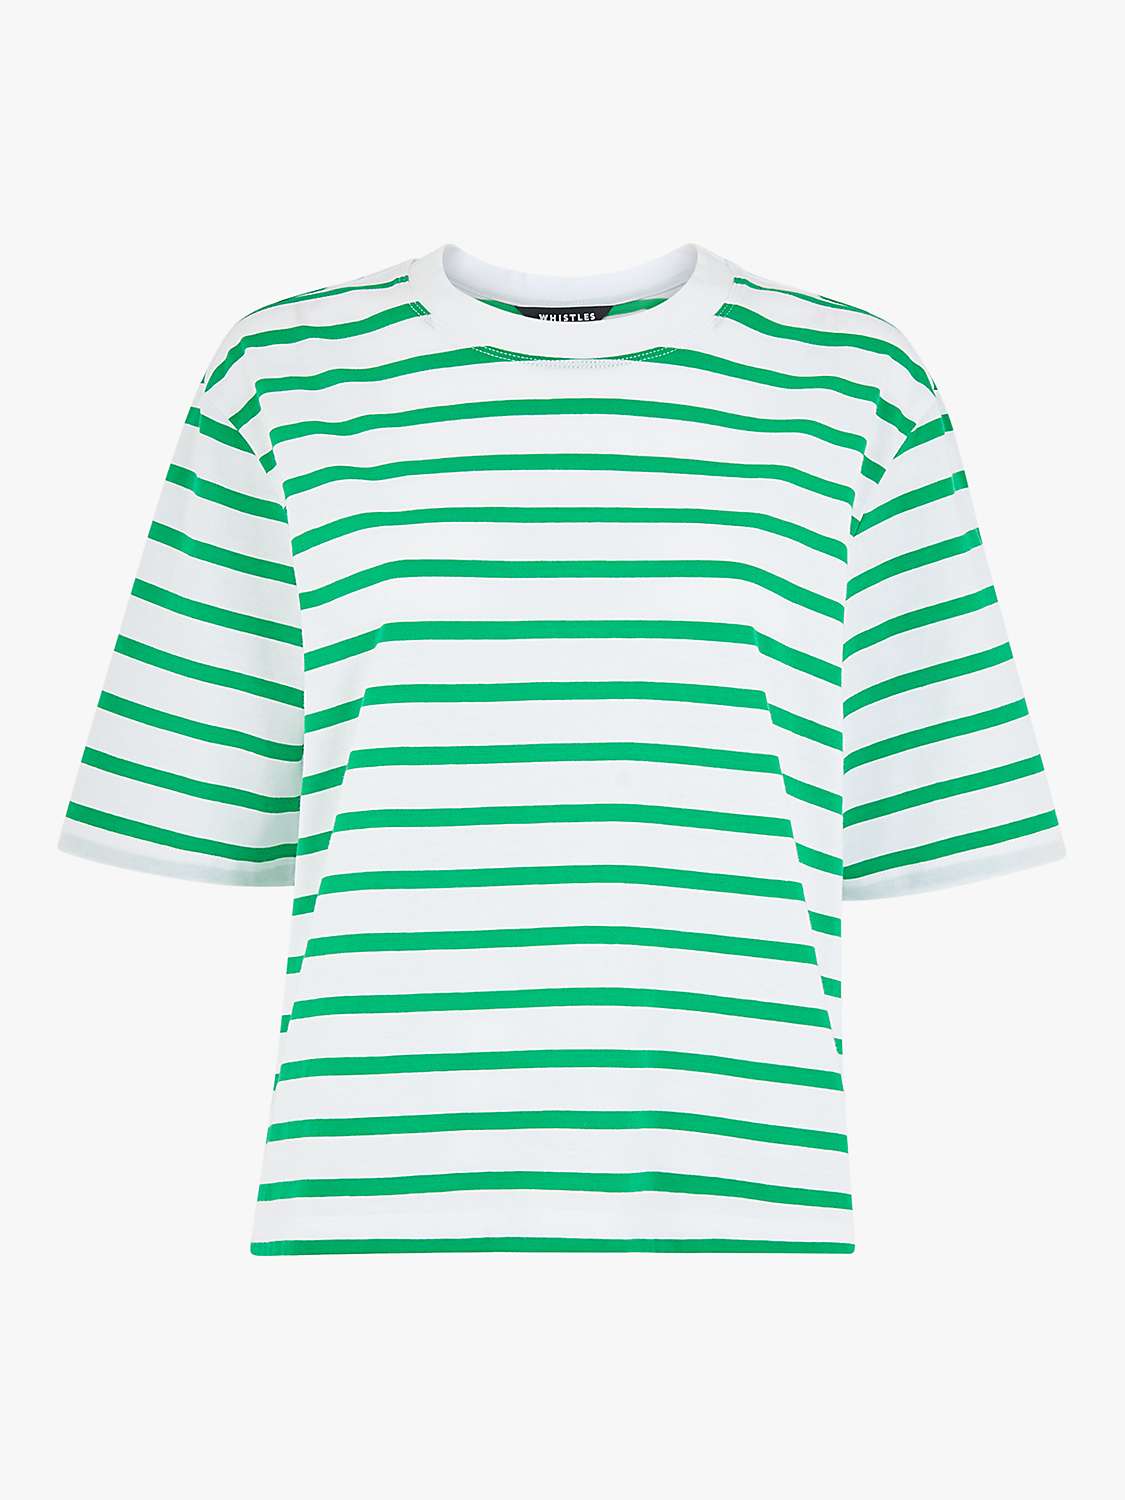 Buy Whistles Stripe Short Sleeve Top, Green/Multi Online at johnlewis.com